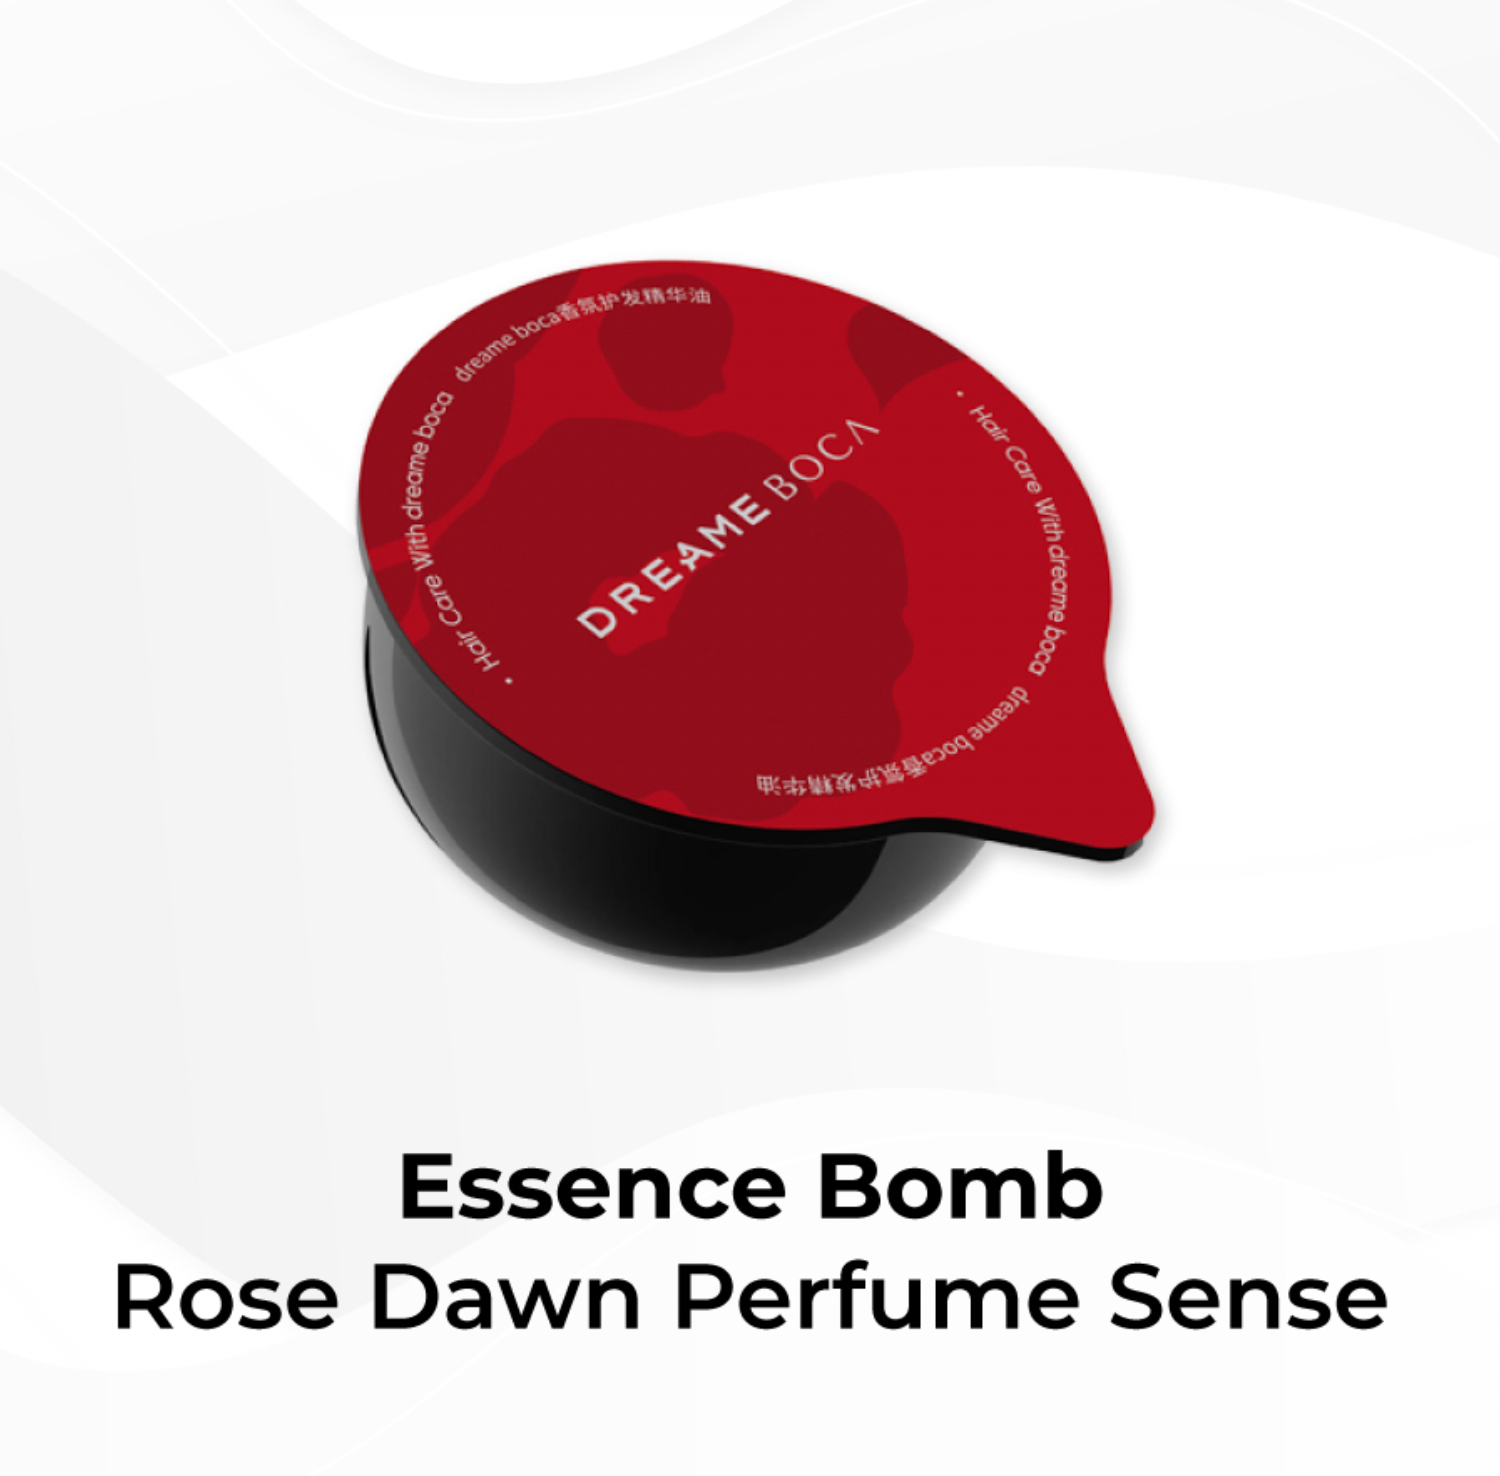 [SG Stock] Dreame Hair Glory Dryer Accessories | Essence Bomb | Essence Nozzle Set | Hair Dryer Rack